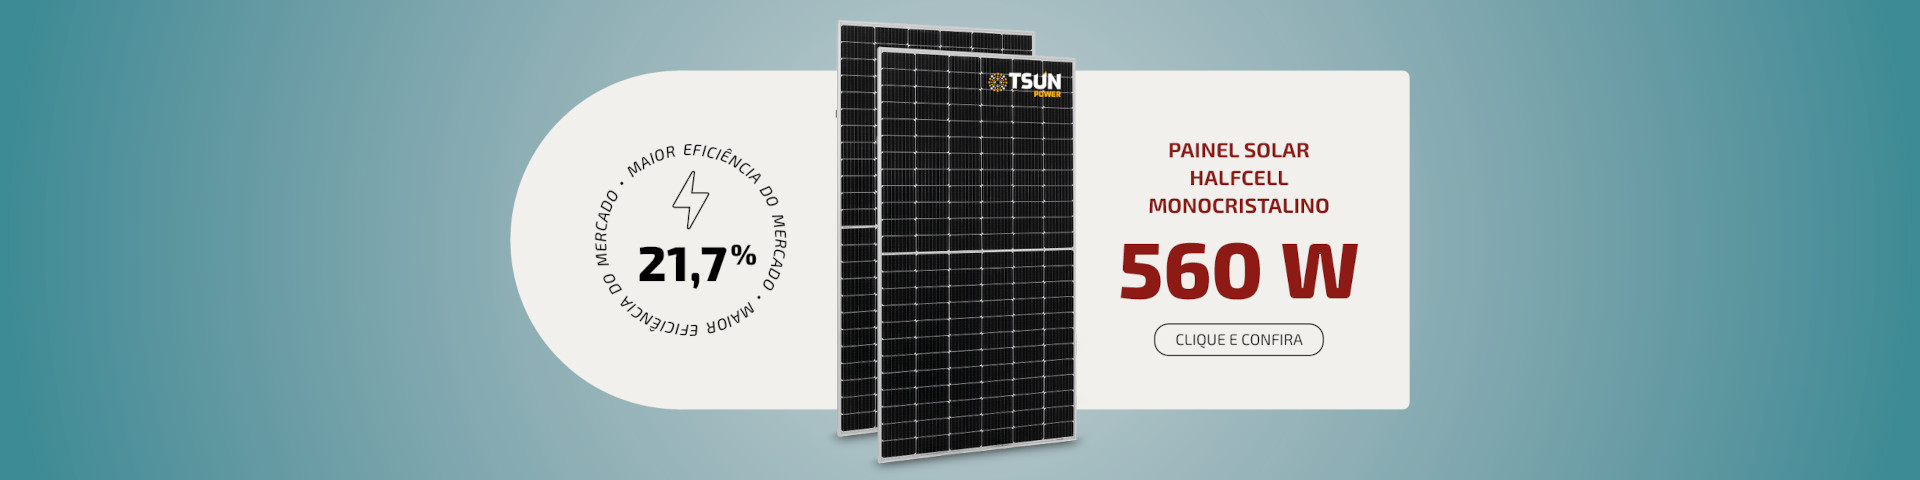 Banner Painel Solar Half Cell Mono Cristalino 560W